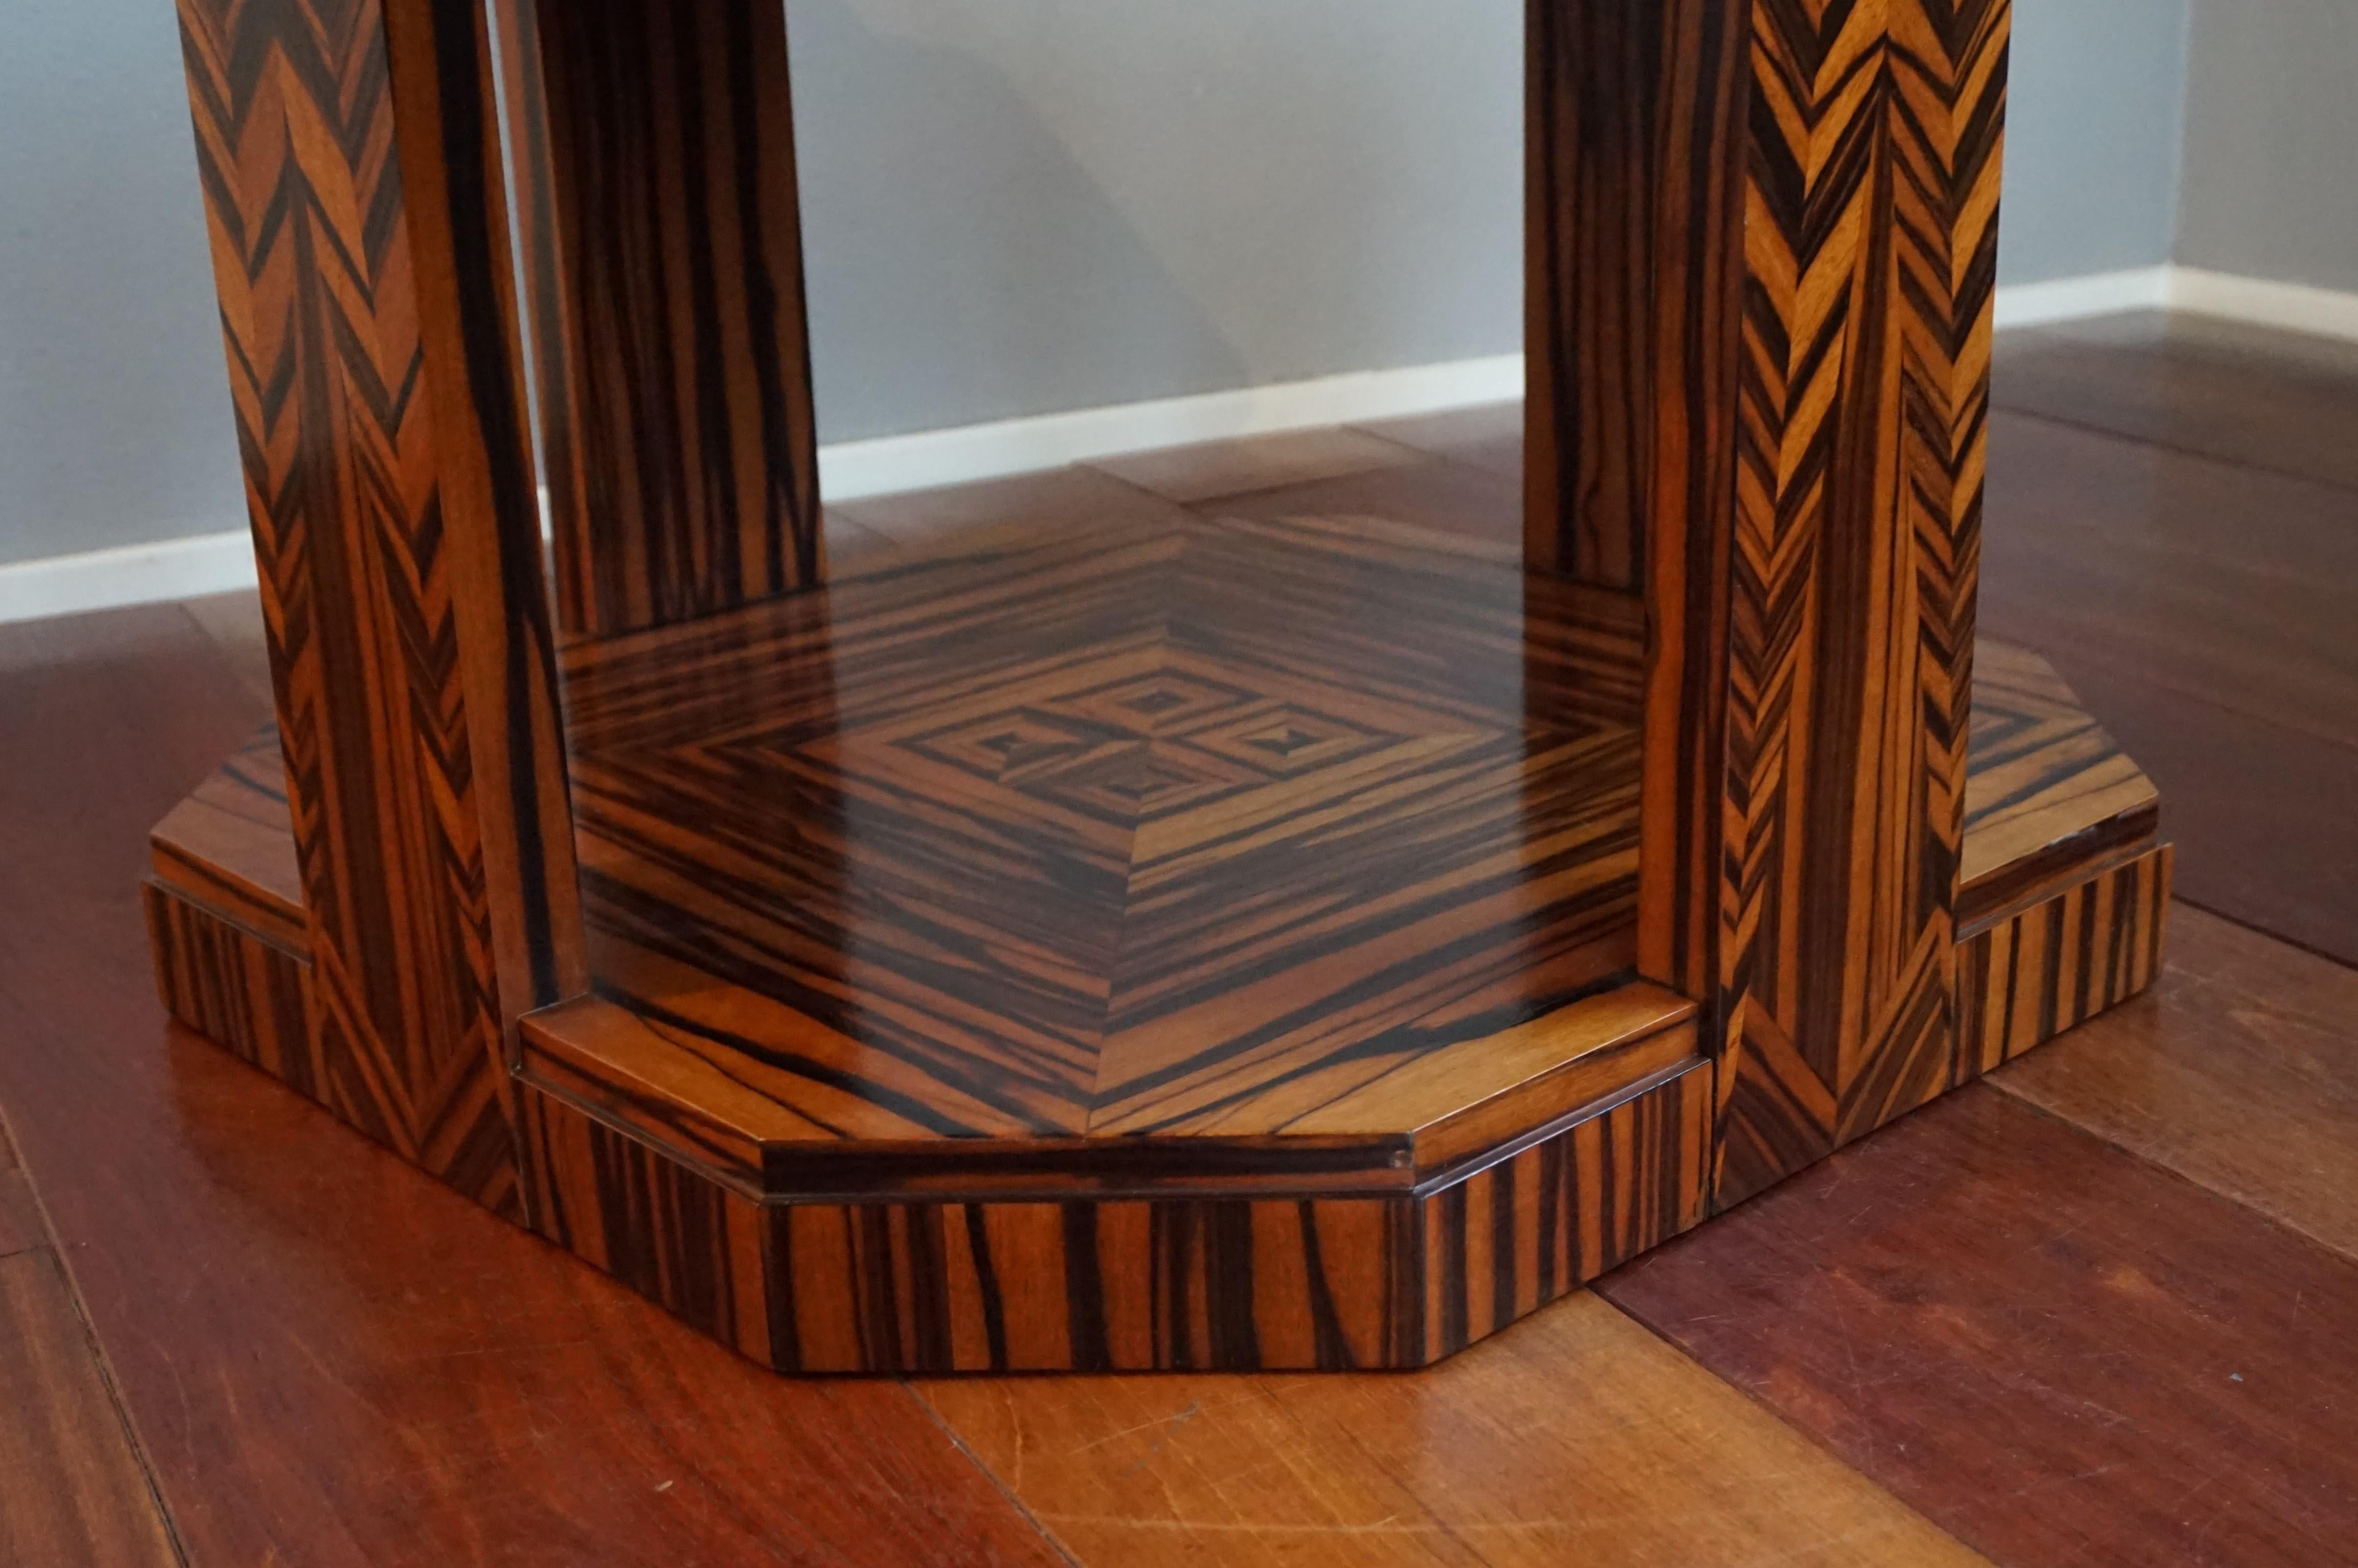 20th Century Unique Coromandel Art Deco Étagère Table with Stunning Inlaid Geometric Patterns